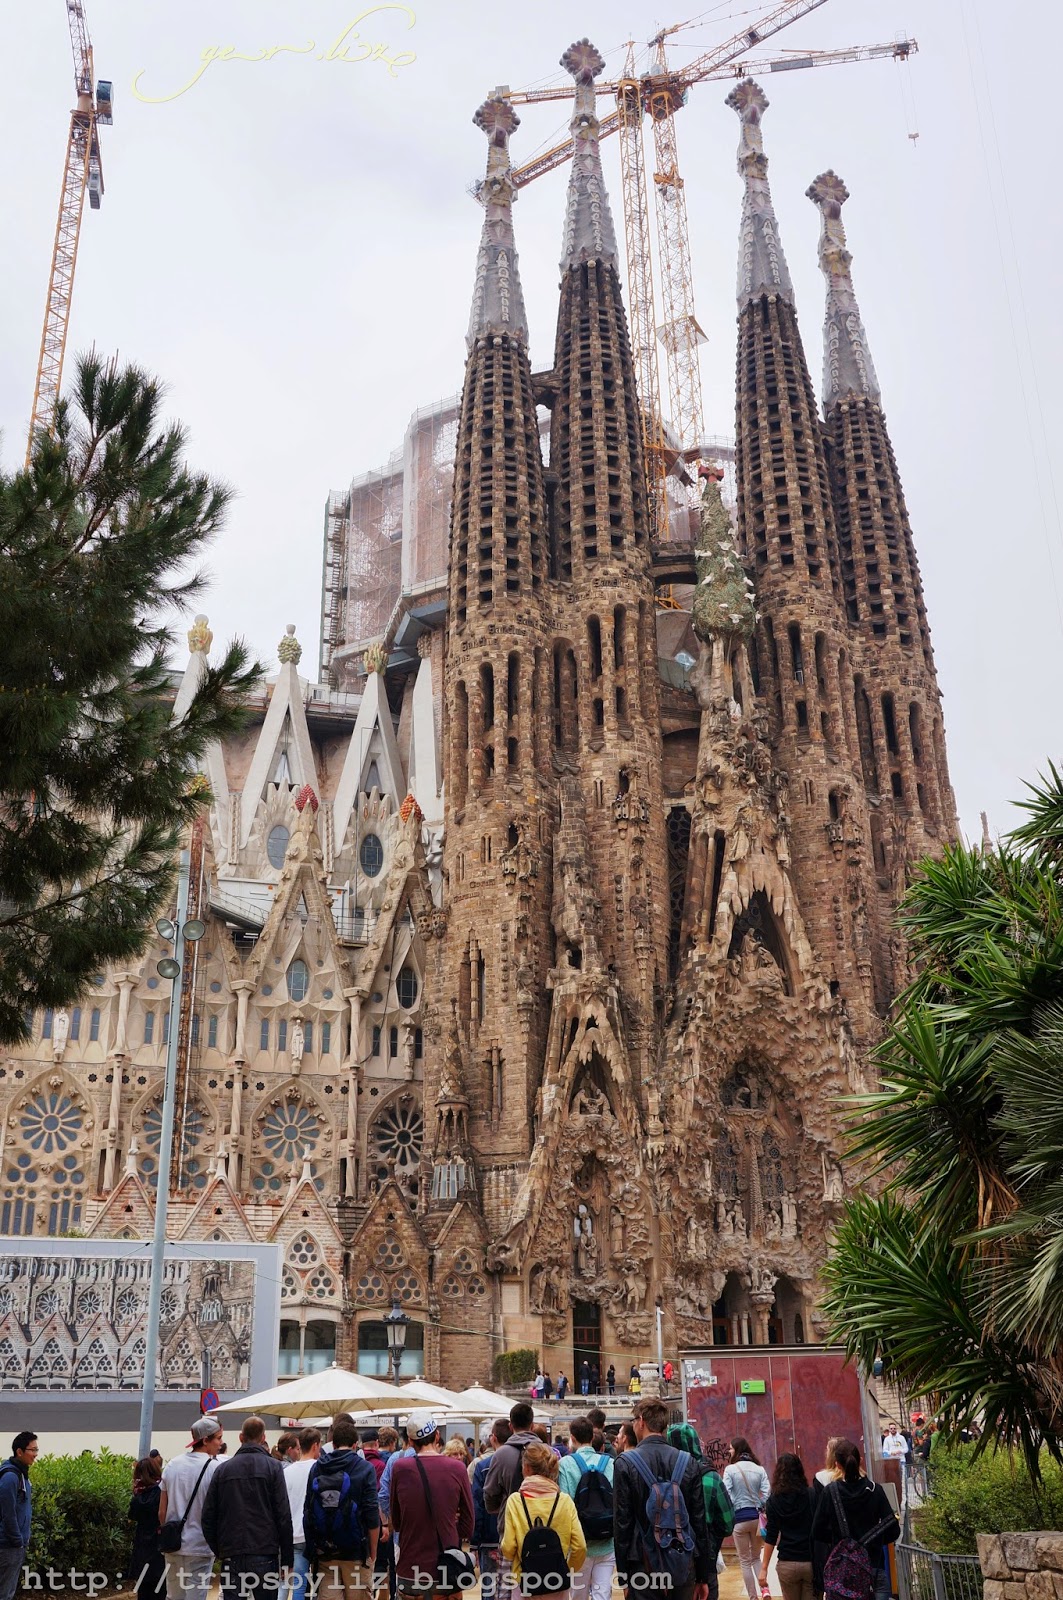 Sagrada Familia Up Close | Trips... by Liz